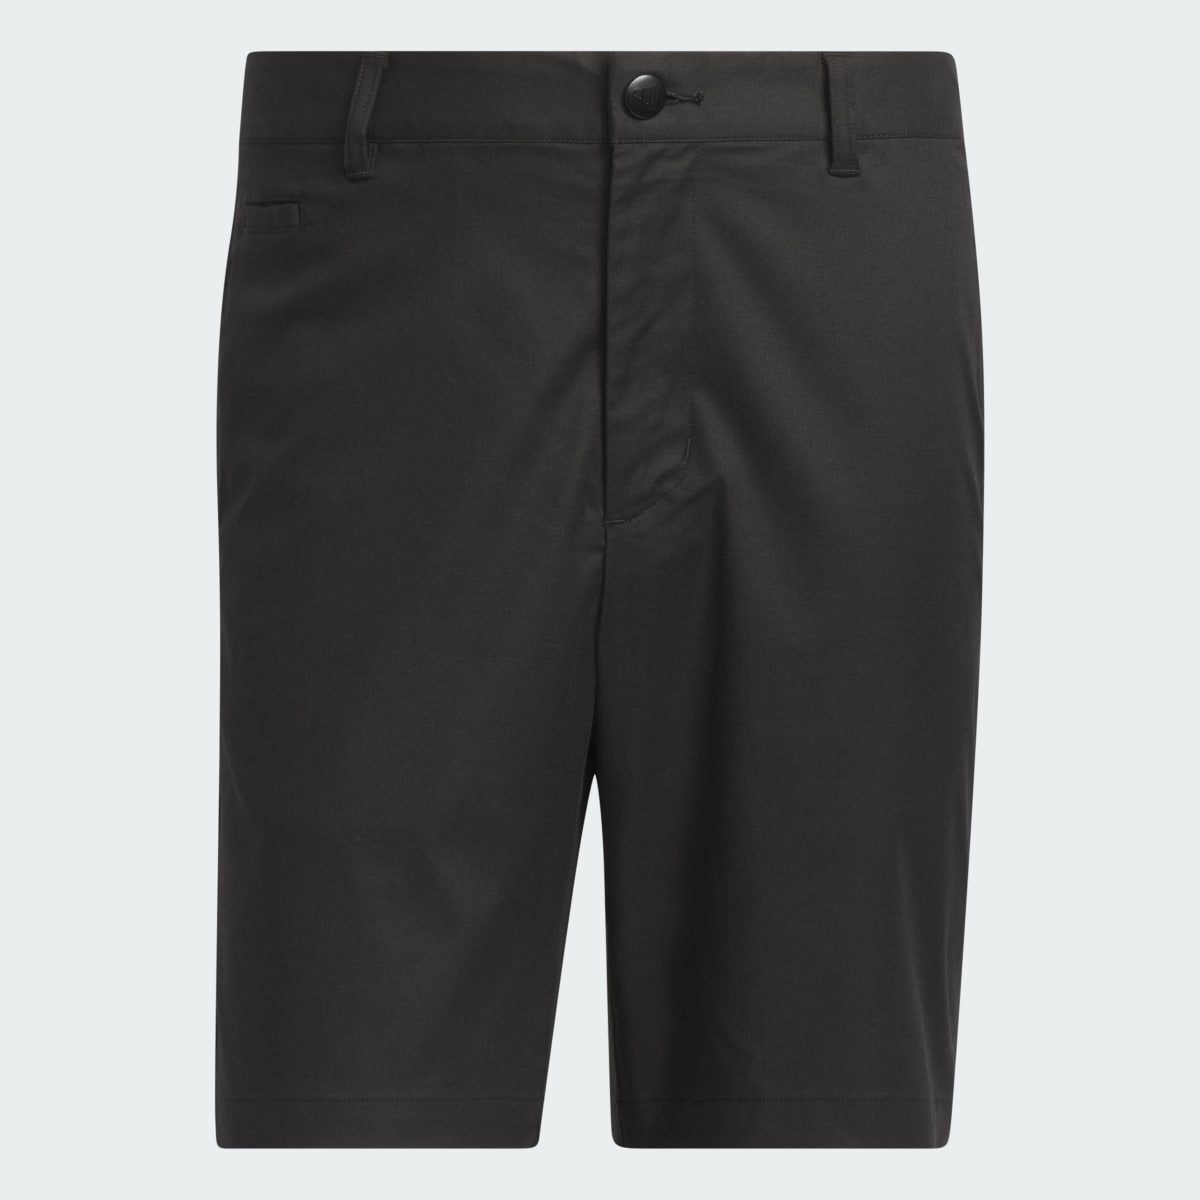 Adidas Go-To Five-Pocket Golf Shorts. 5